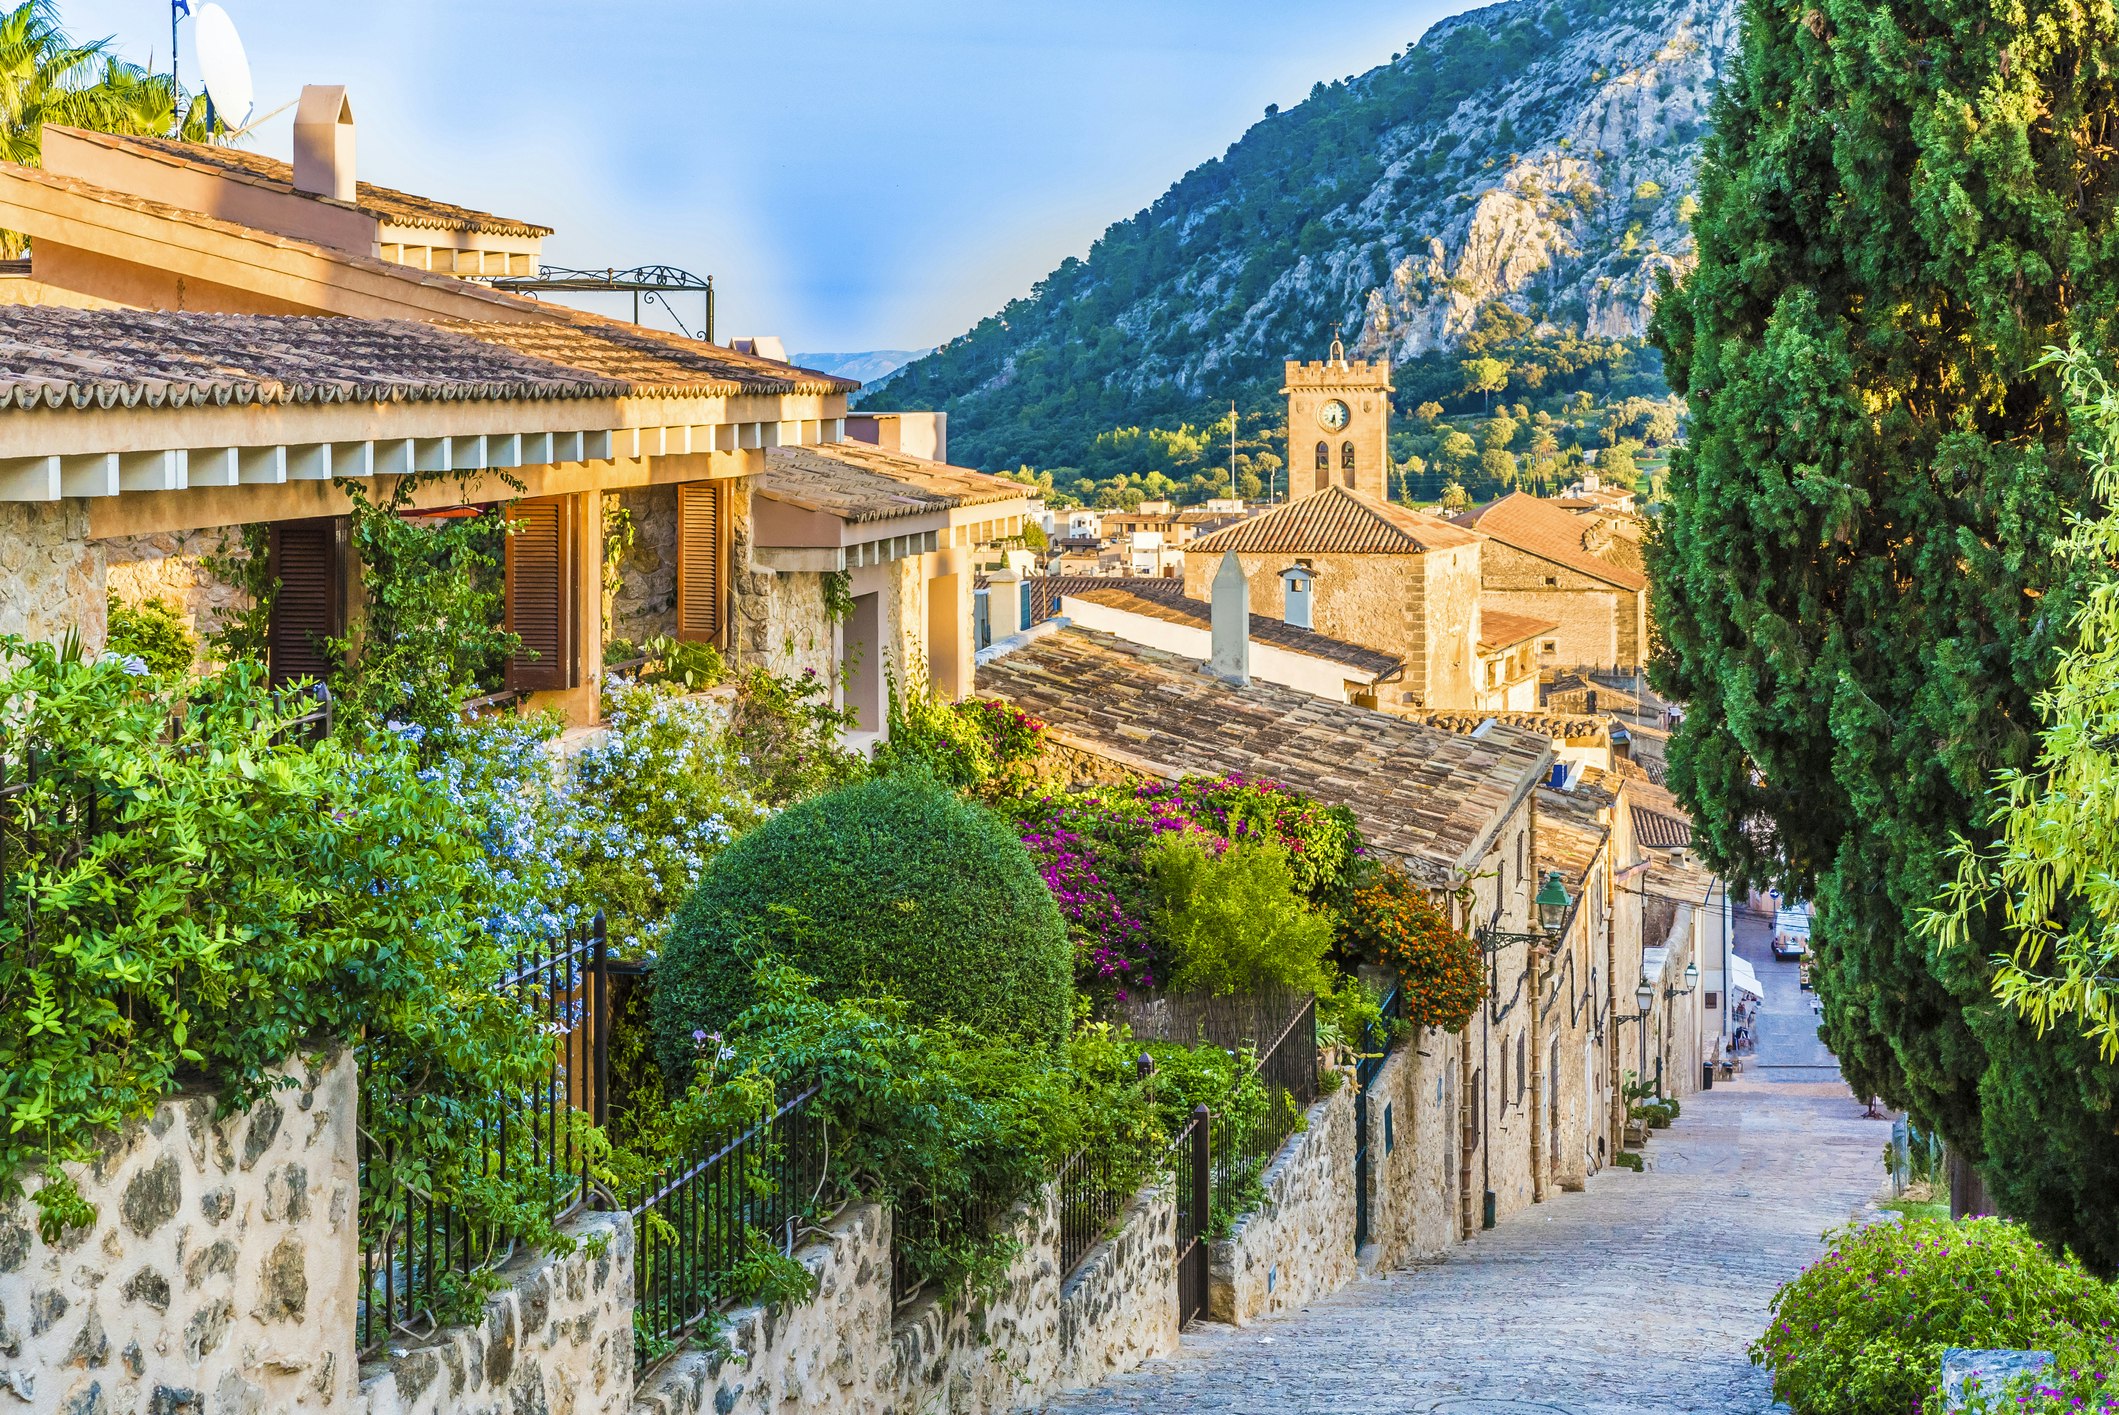 The village of Pollenca, Mallorca